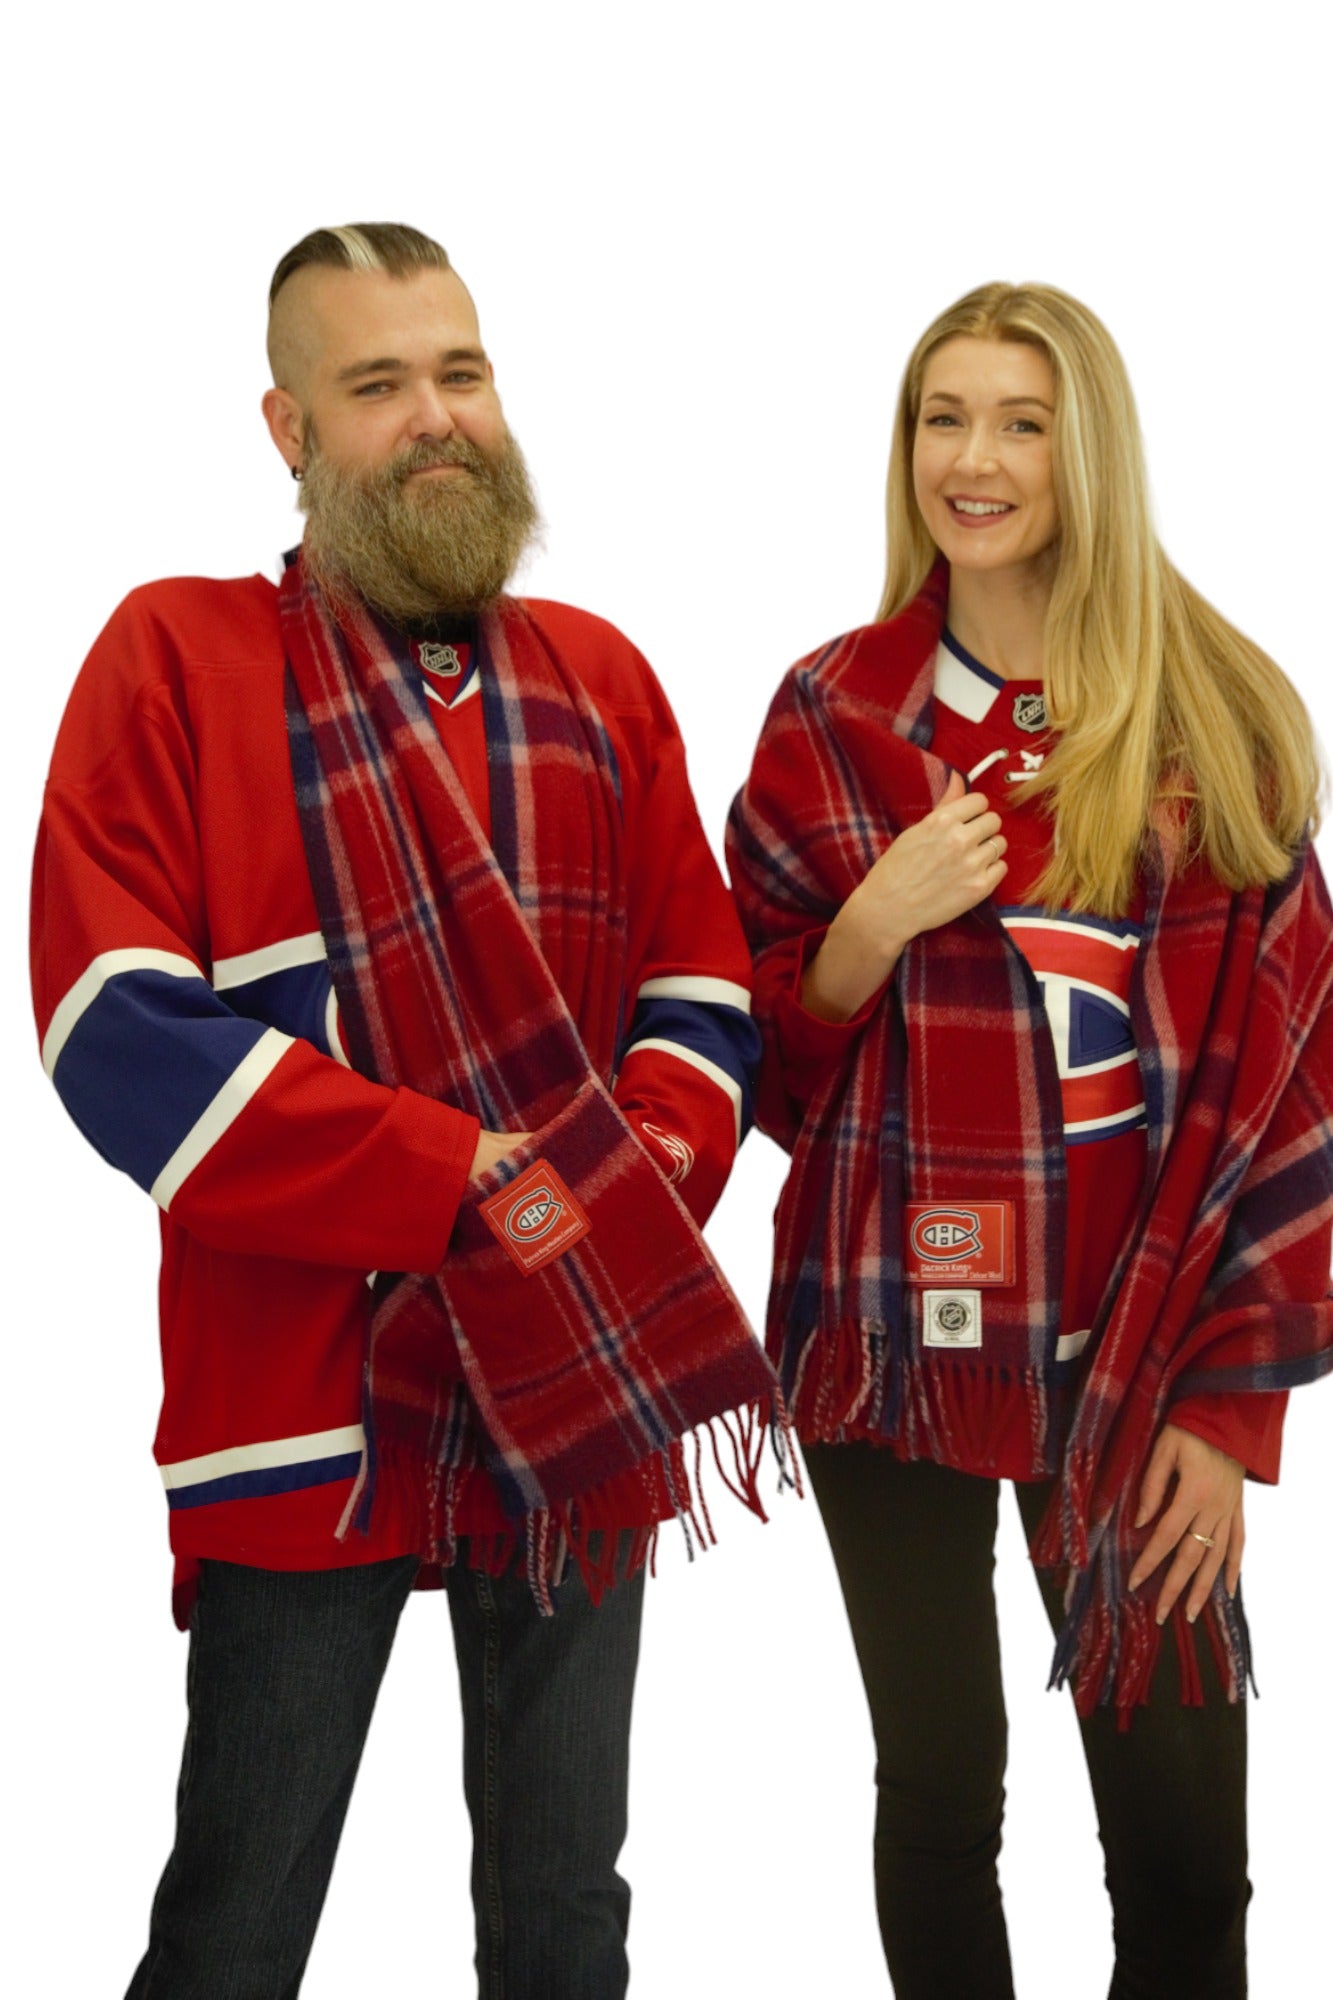 Montreal Canadiens Wool Pocket Scarf